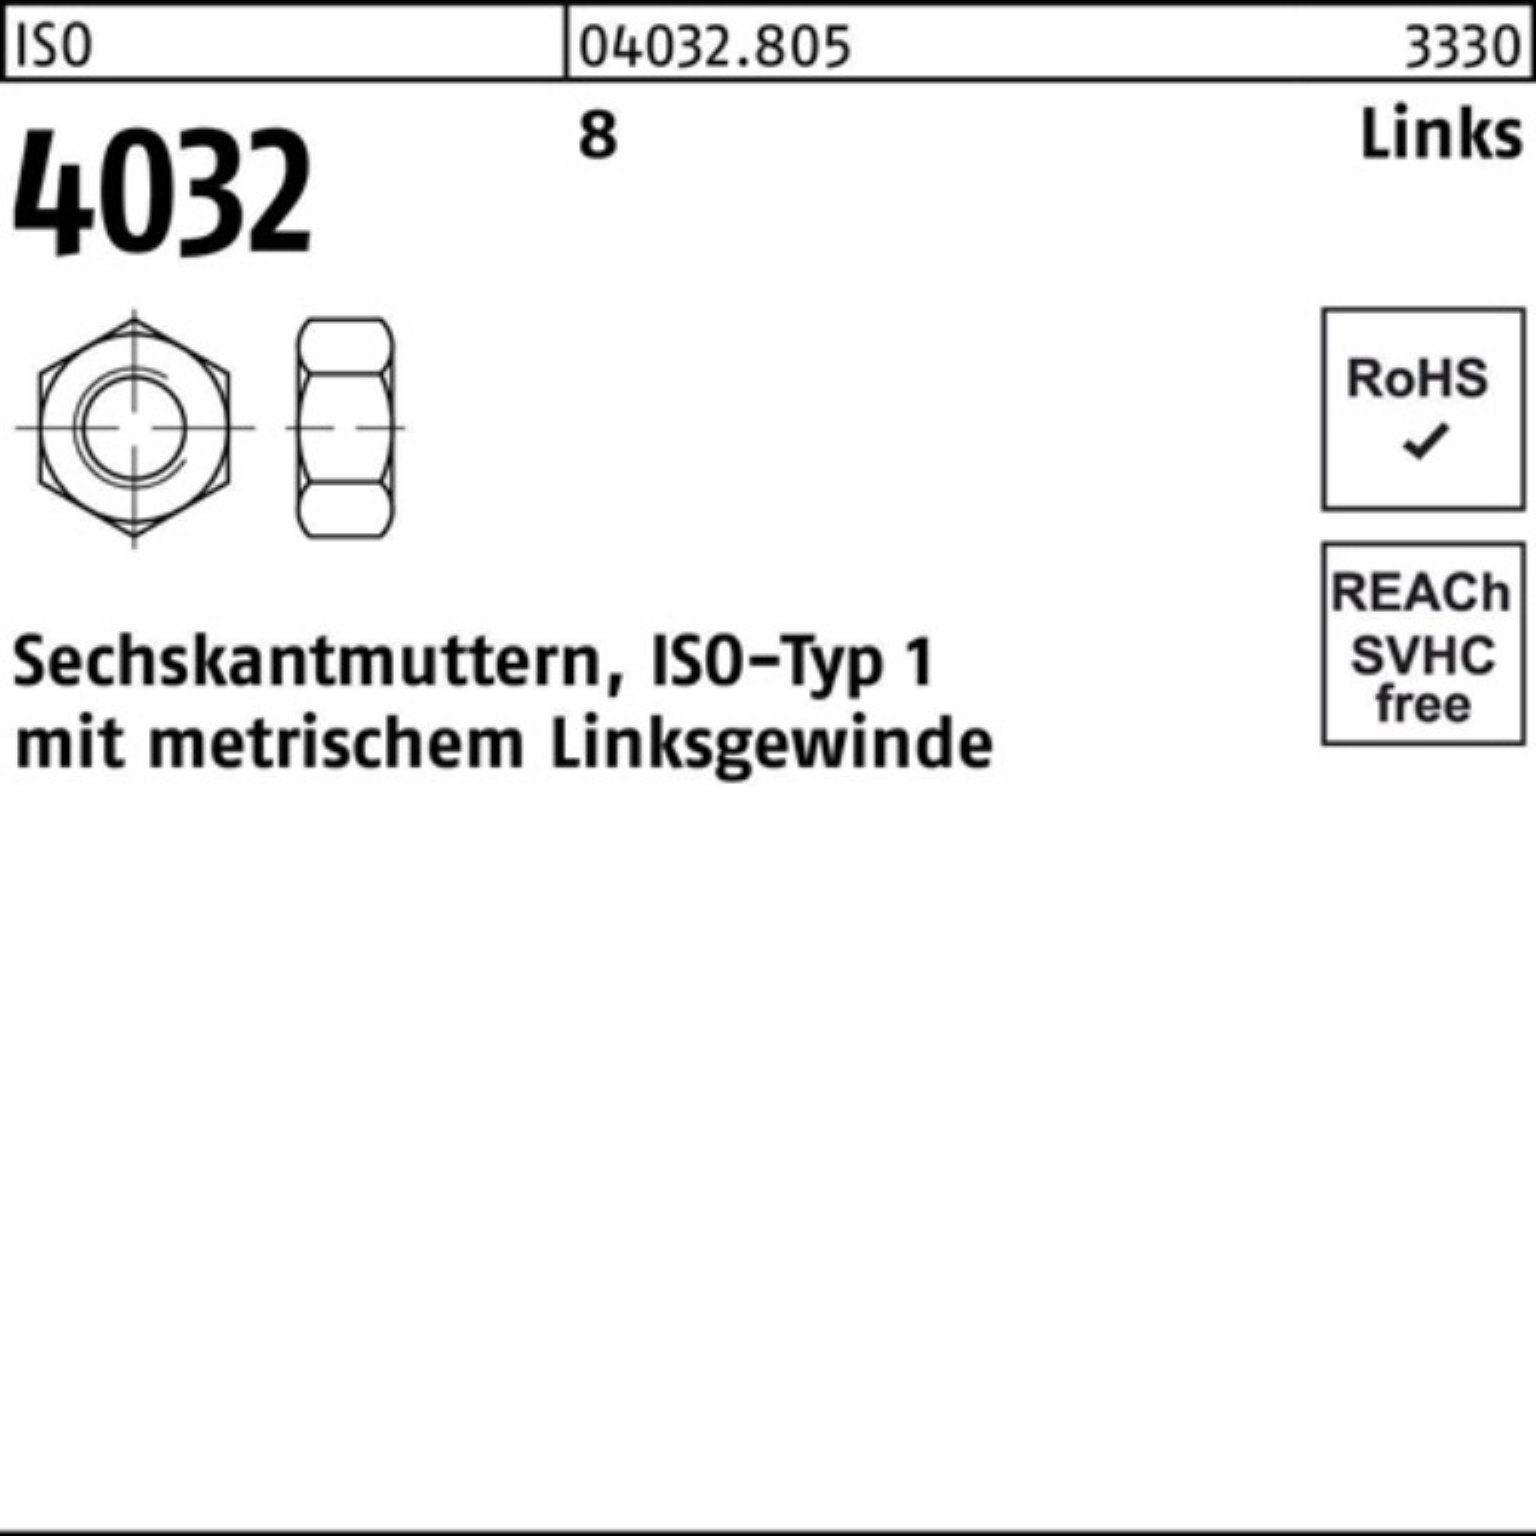 Pack M6 100er ISO 4032 Stück 4032 ISO 8 Sechskantmutter Muttern 100 links Bufab -LH